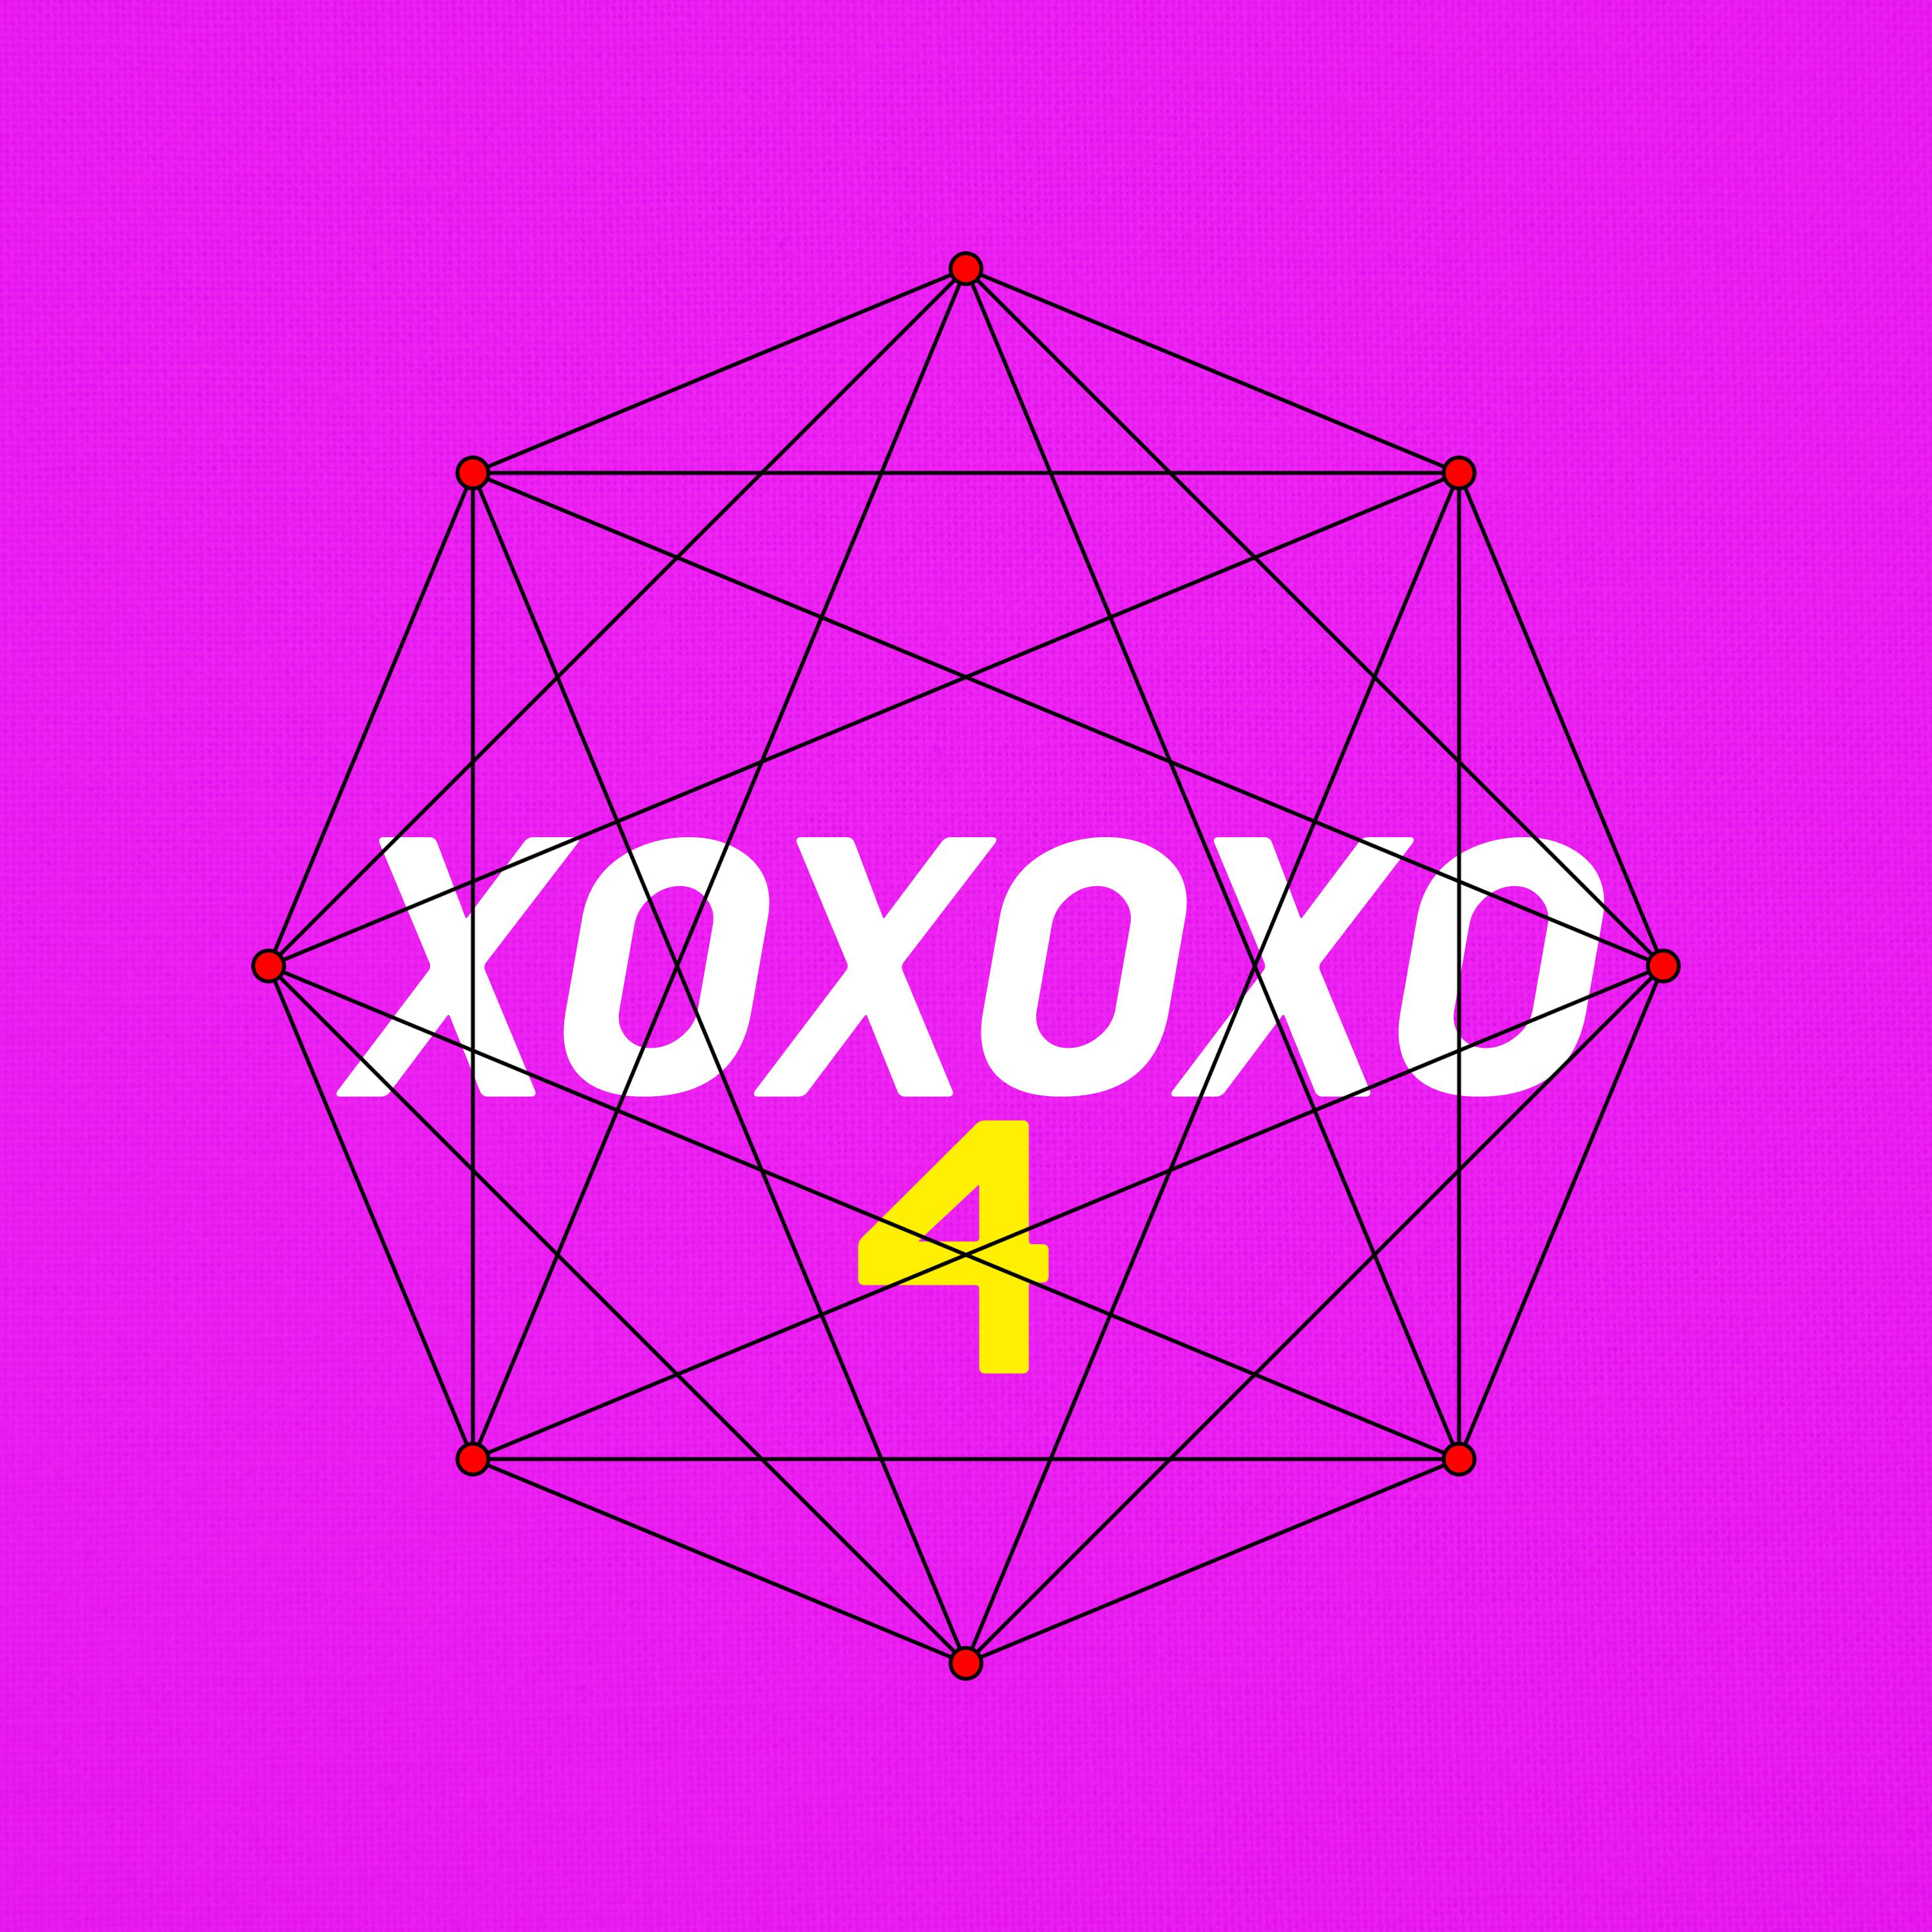 XOXOXO 4